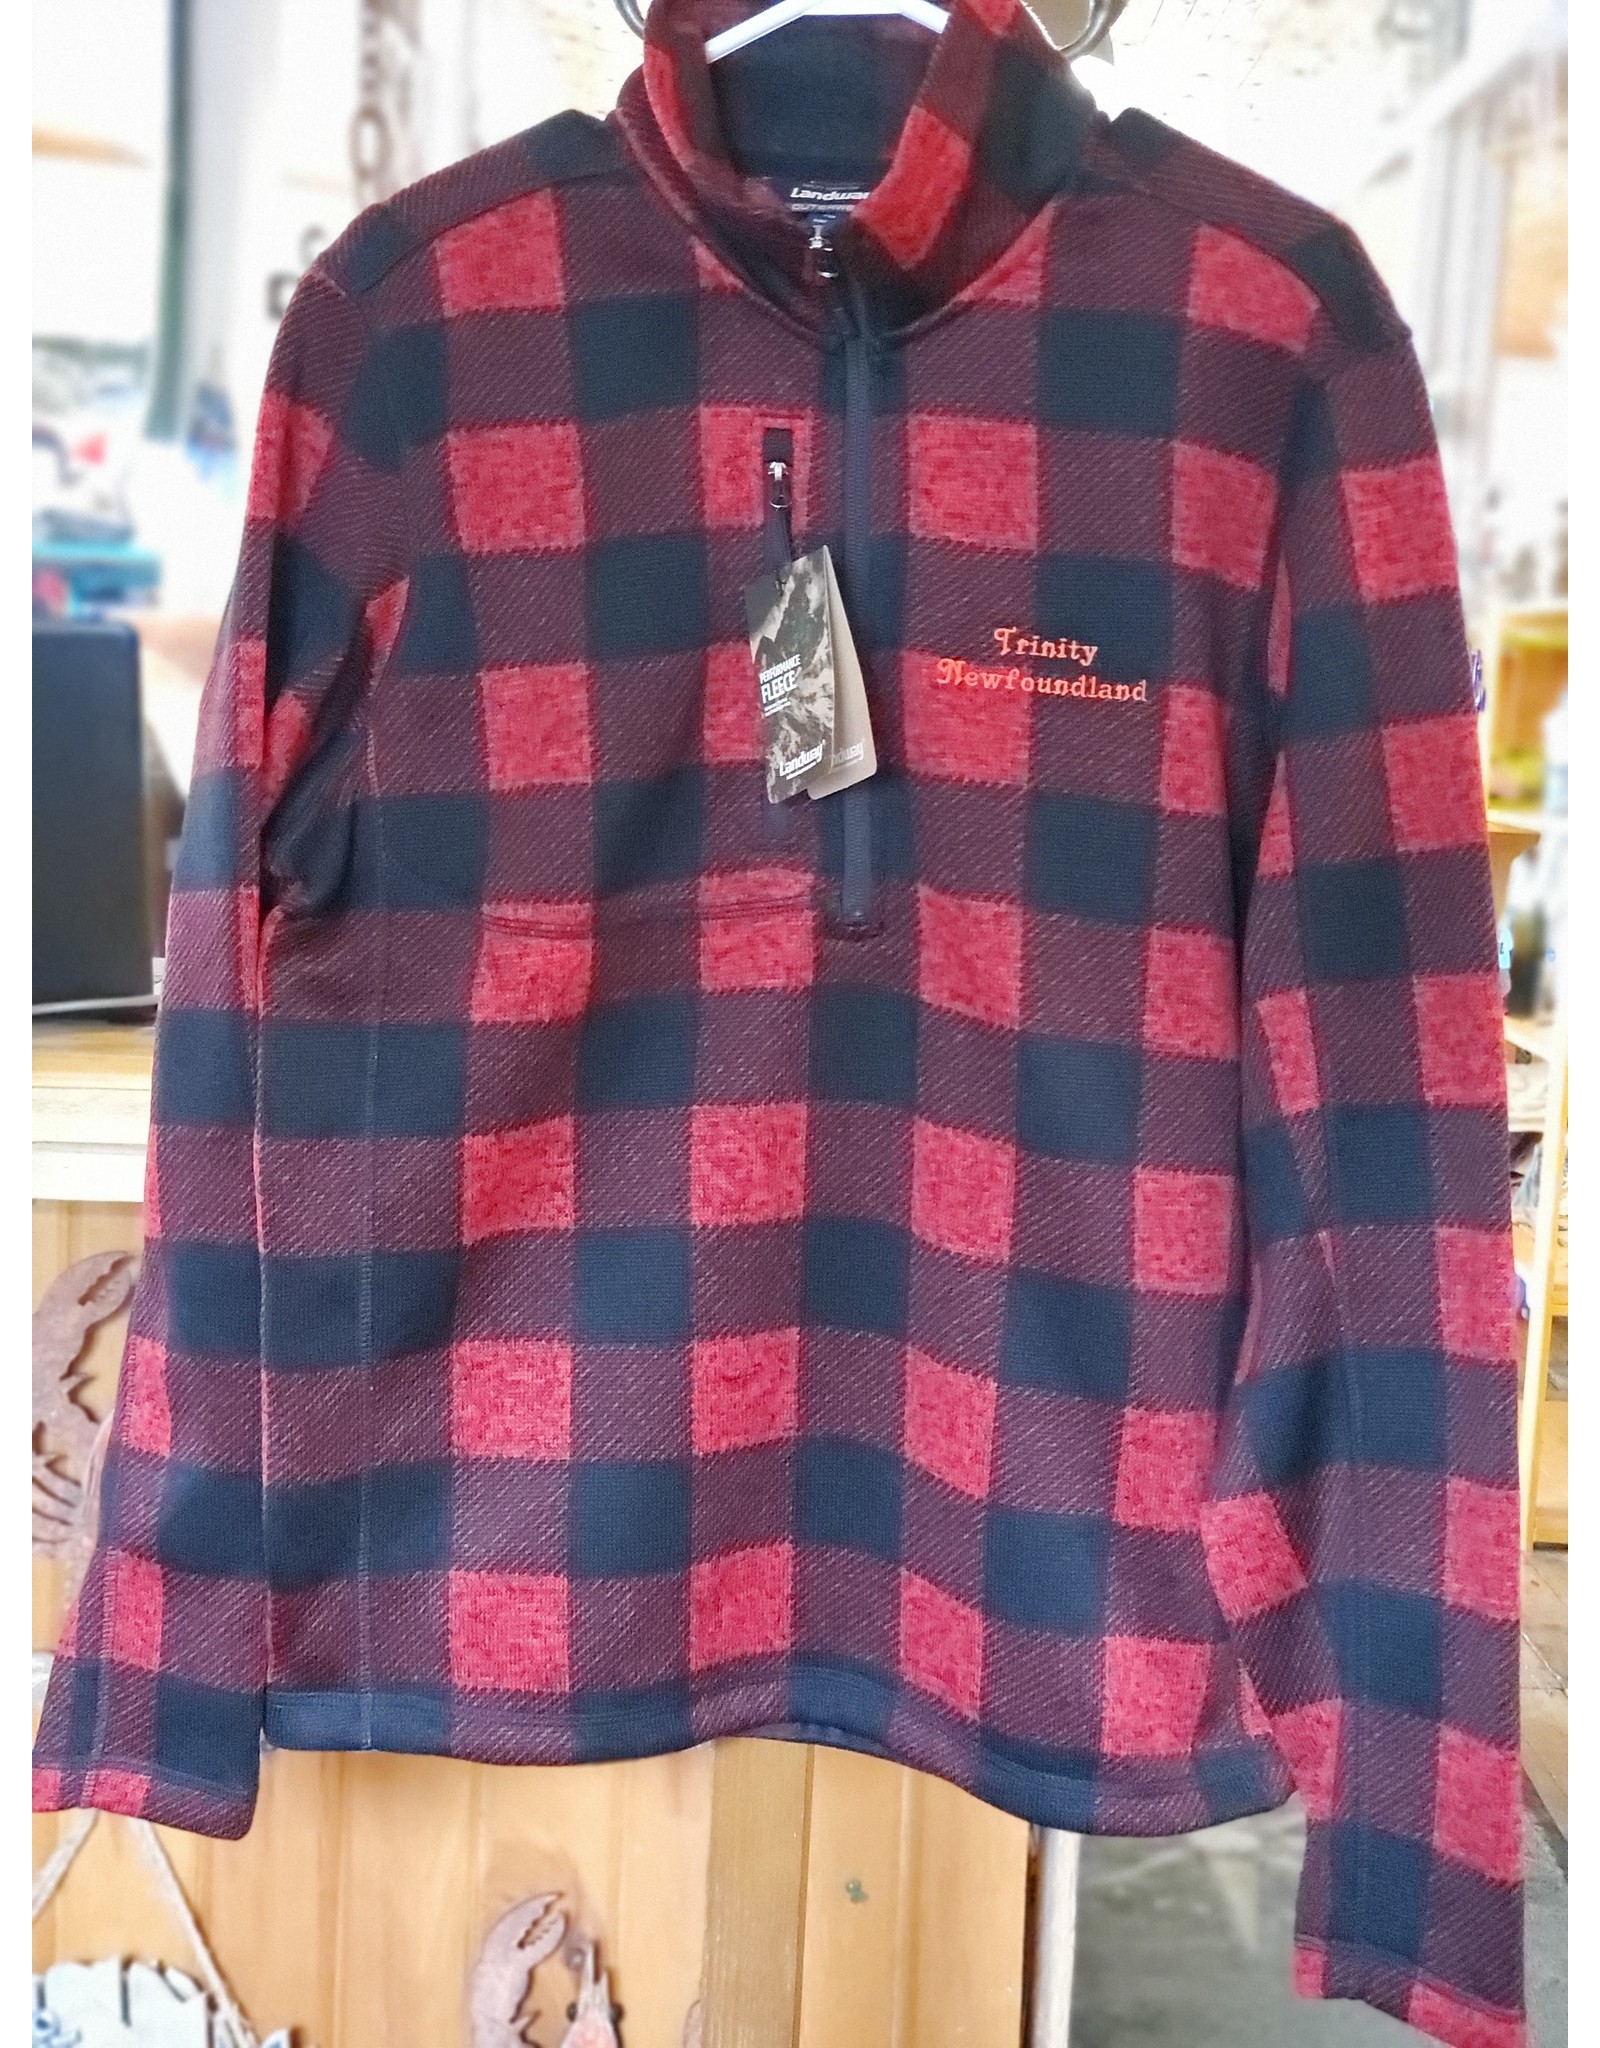 RAD Distribution Kodiac Lumberjack Sweater Red, Med. #51